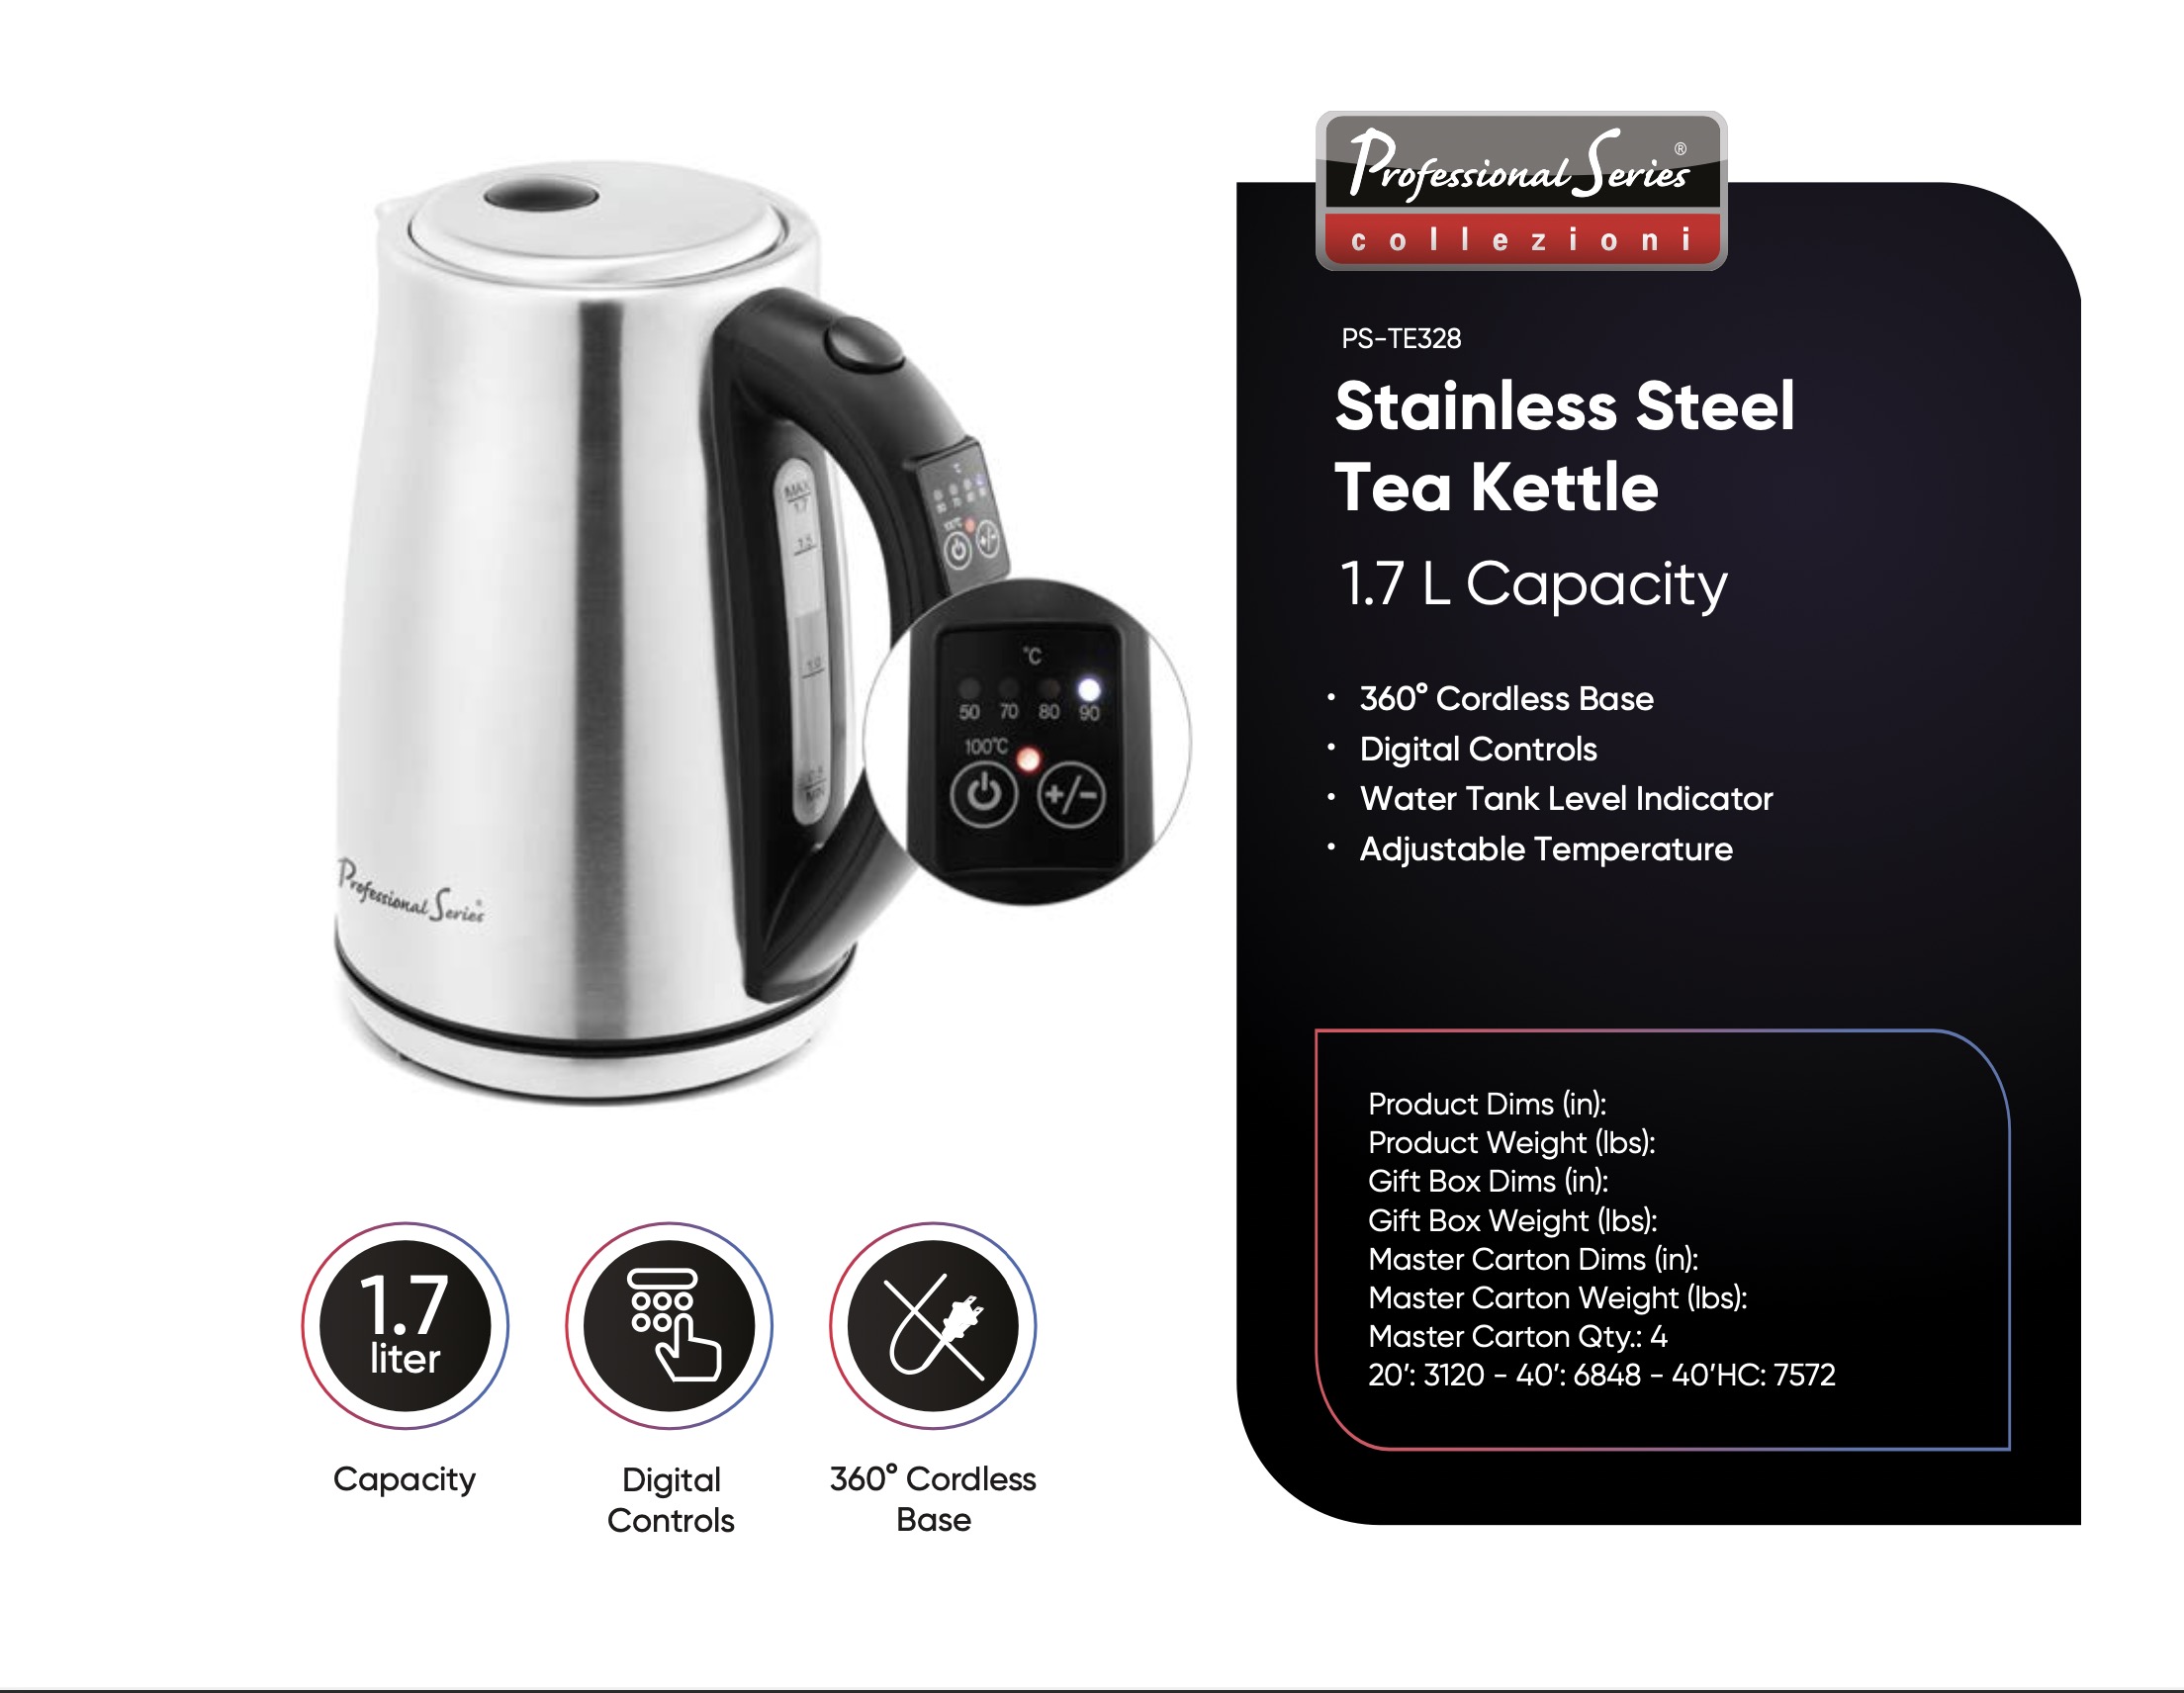 Stainless Steel Tea Kettle 1.7 L Capacity